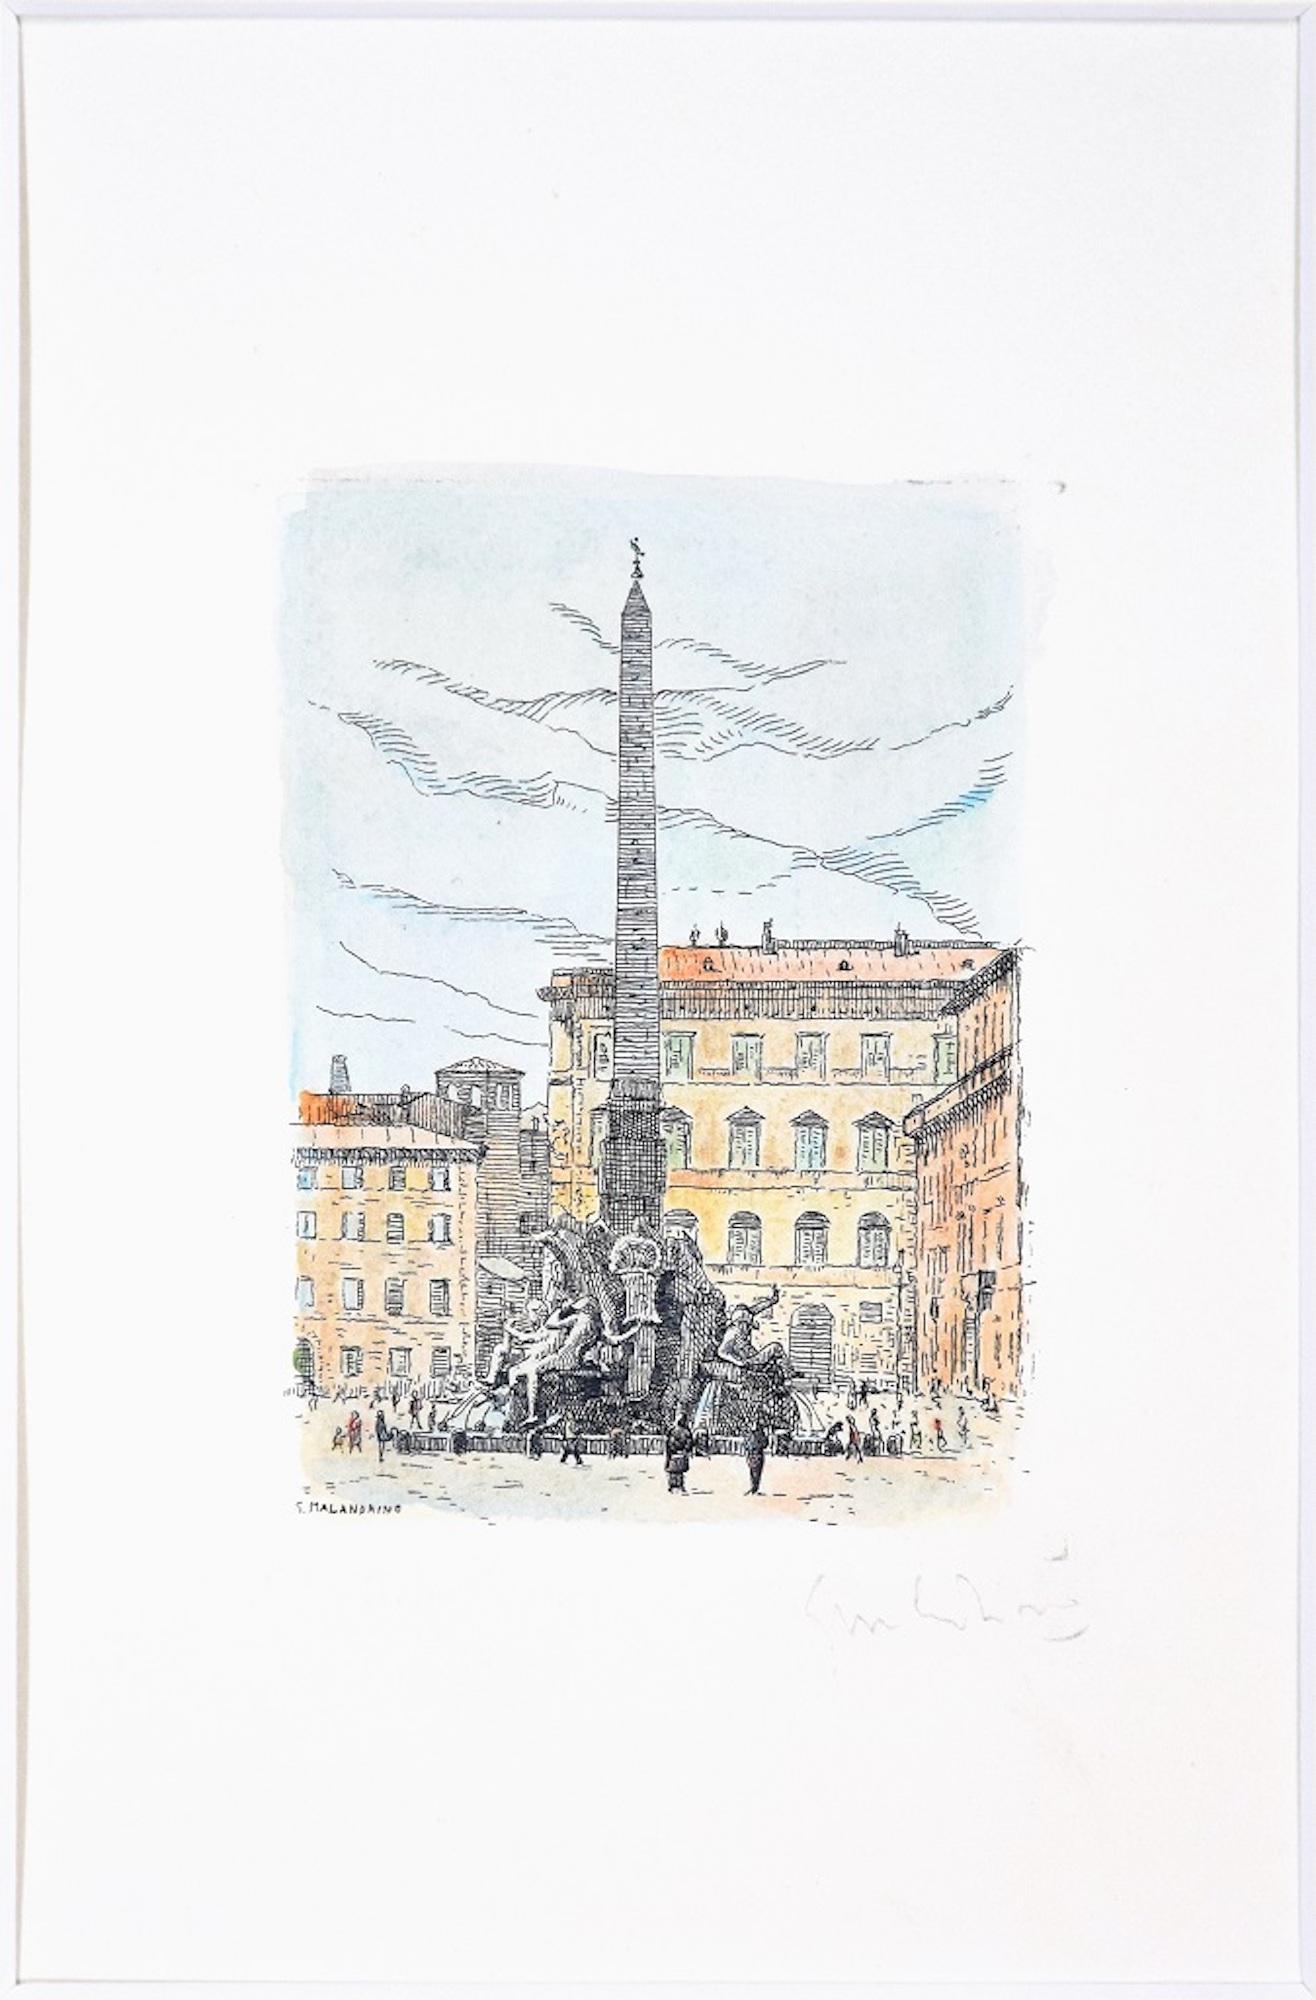 Giuseppe Malandrino Landscape Print - Navona Square (Rome, Italy)  - Original Etching by G. Malandrino 